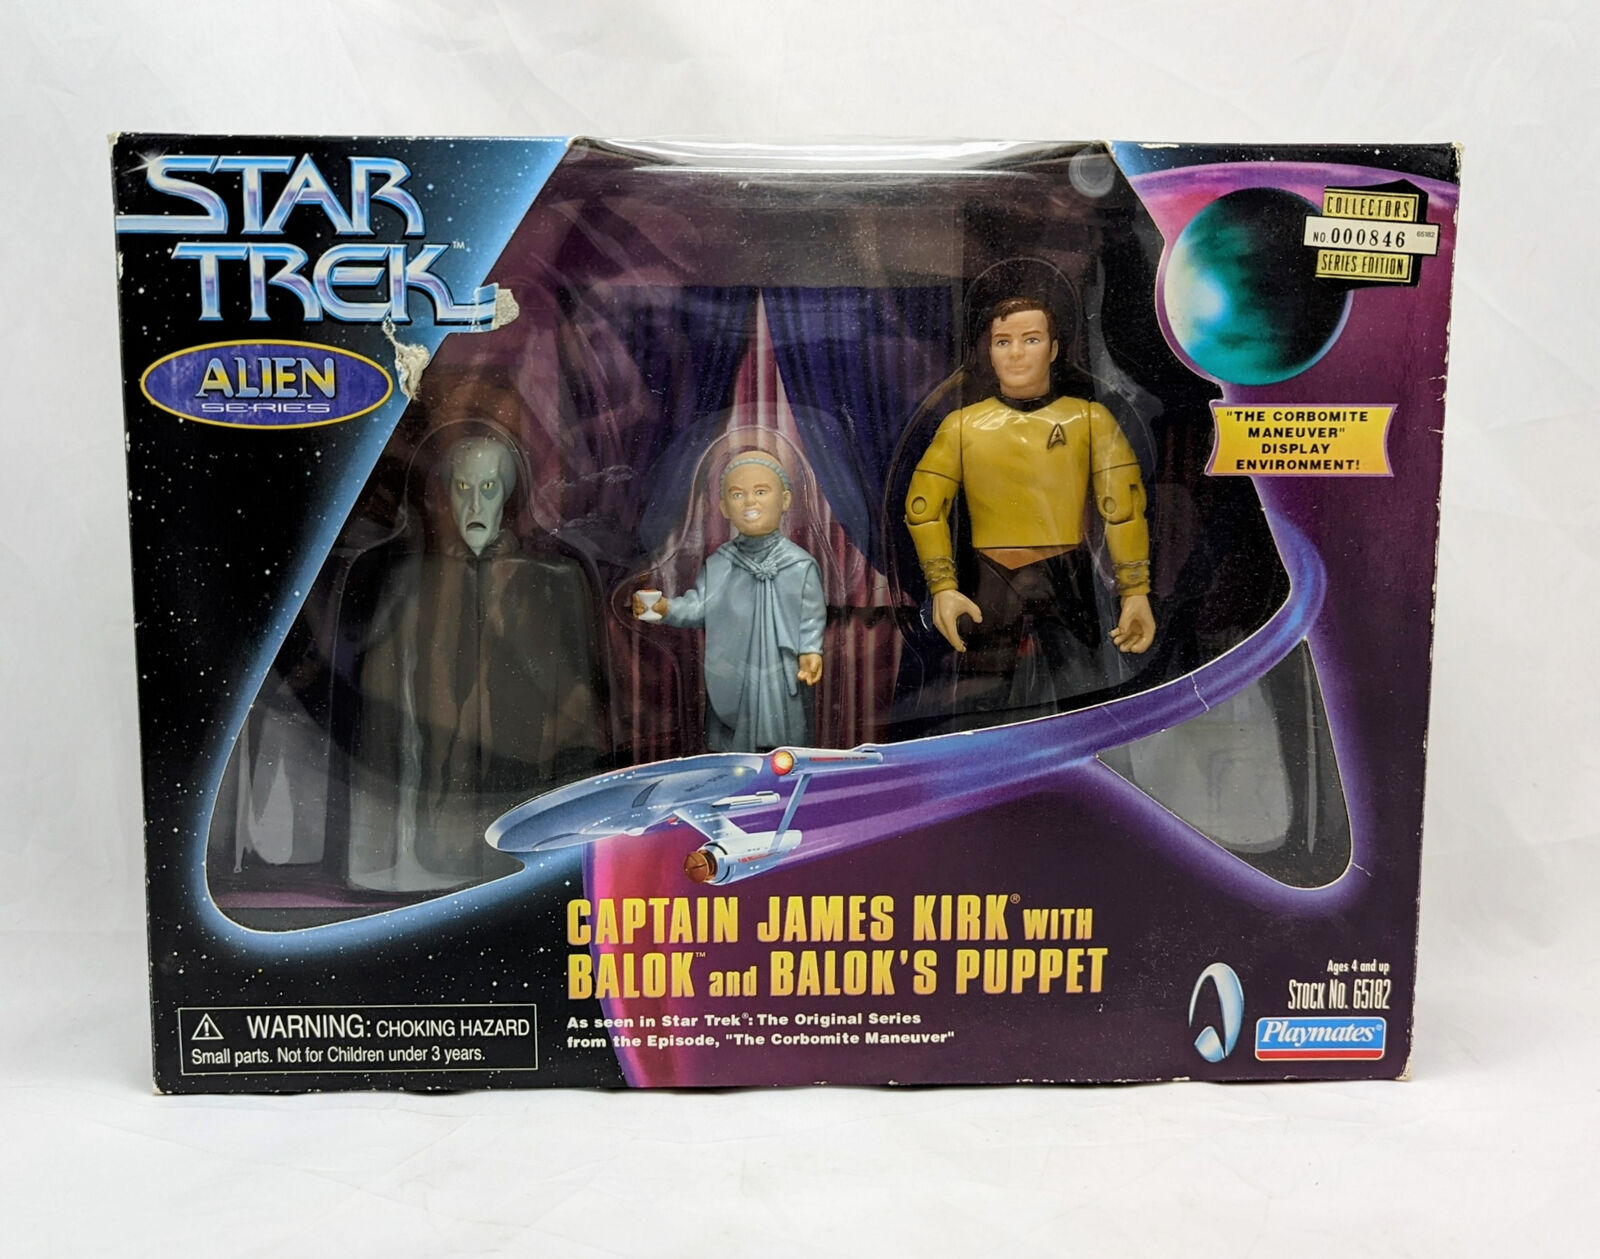 1998 Playmates Star Trek Alien Series Captain James Kirk With Balok